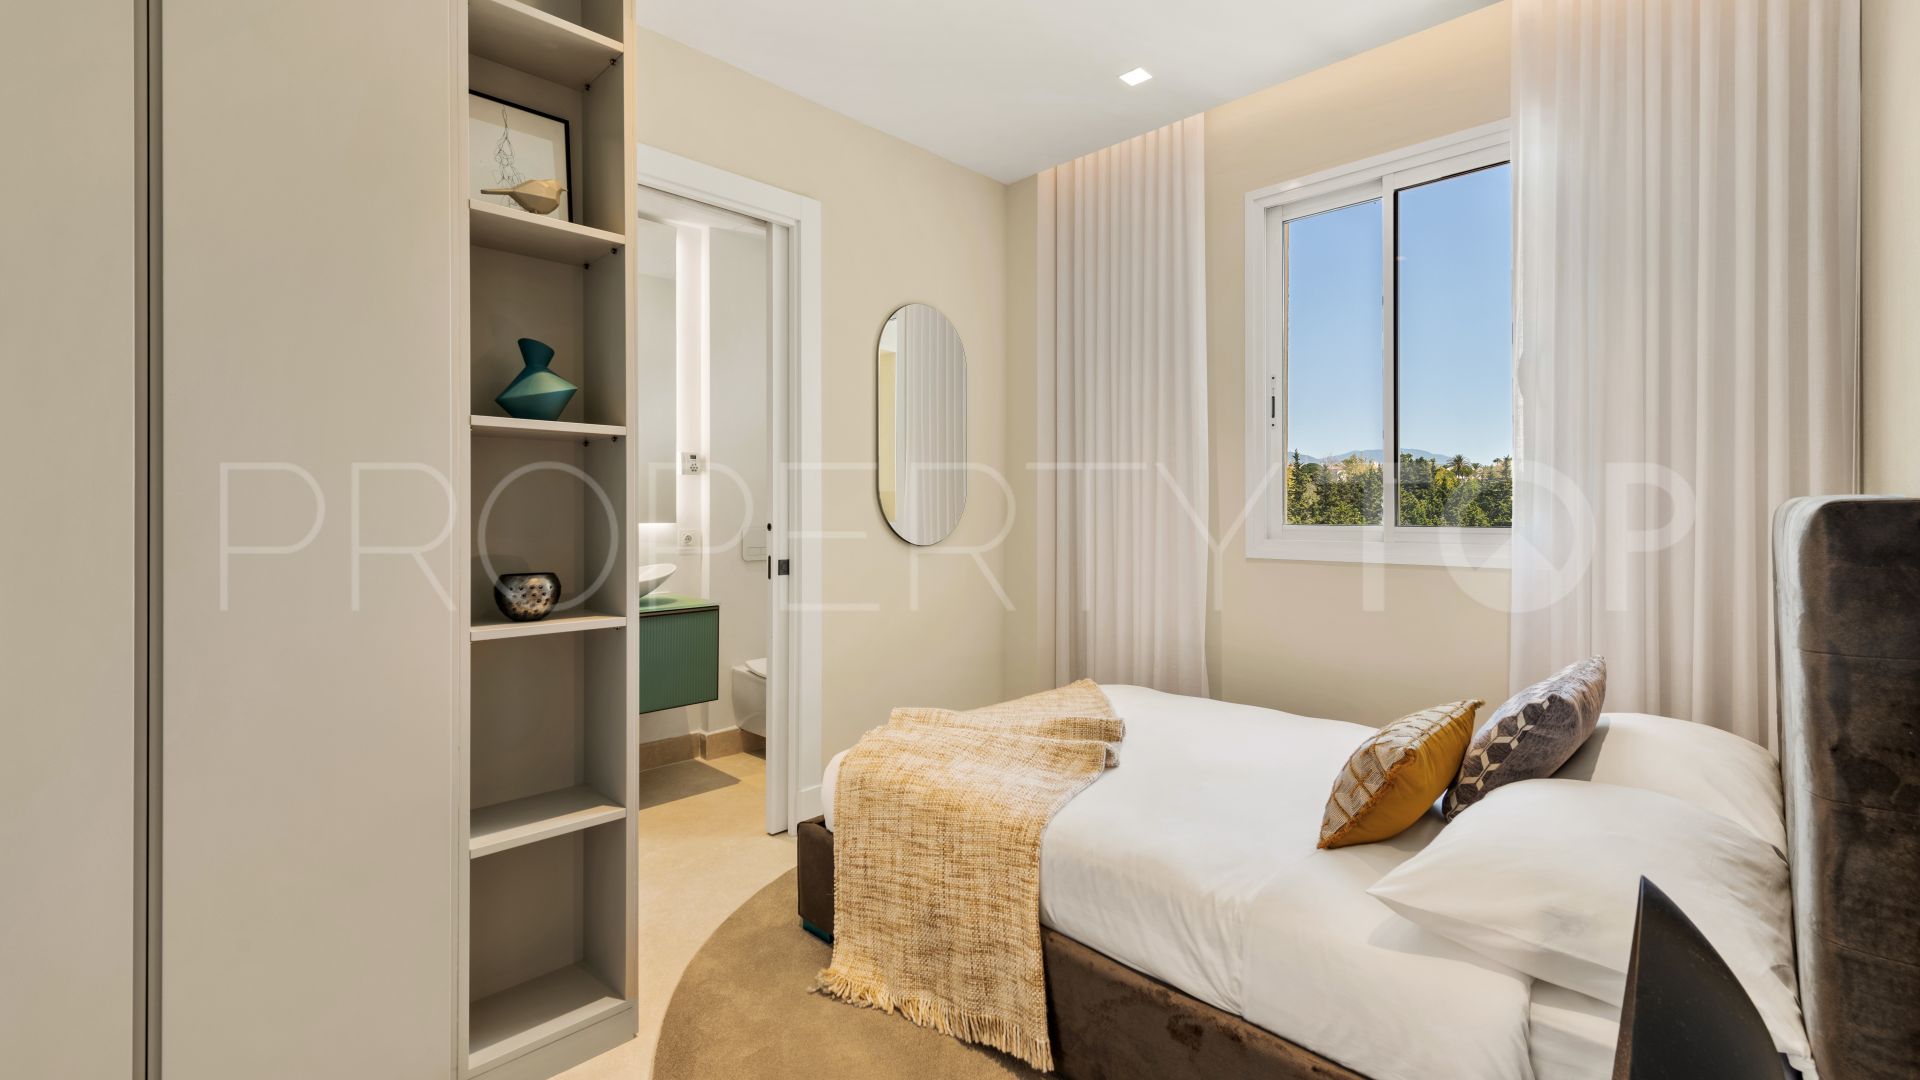 5 bedrooms duplex penthouse in Estepona for sale